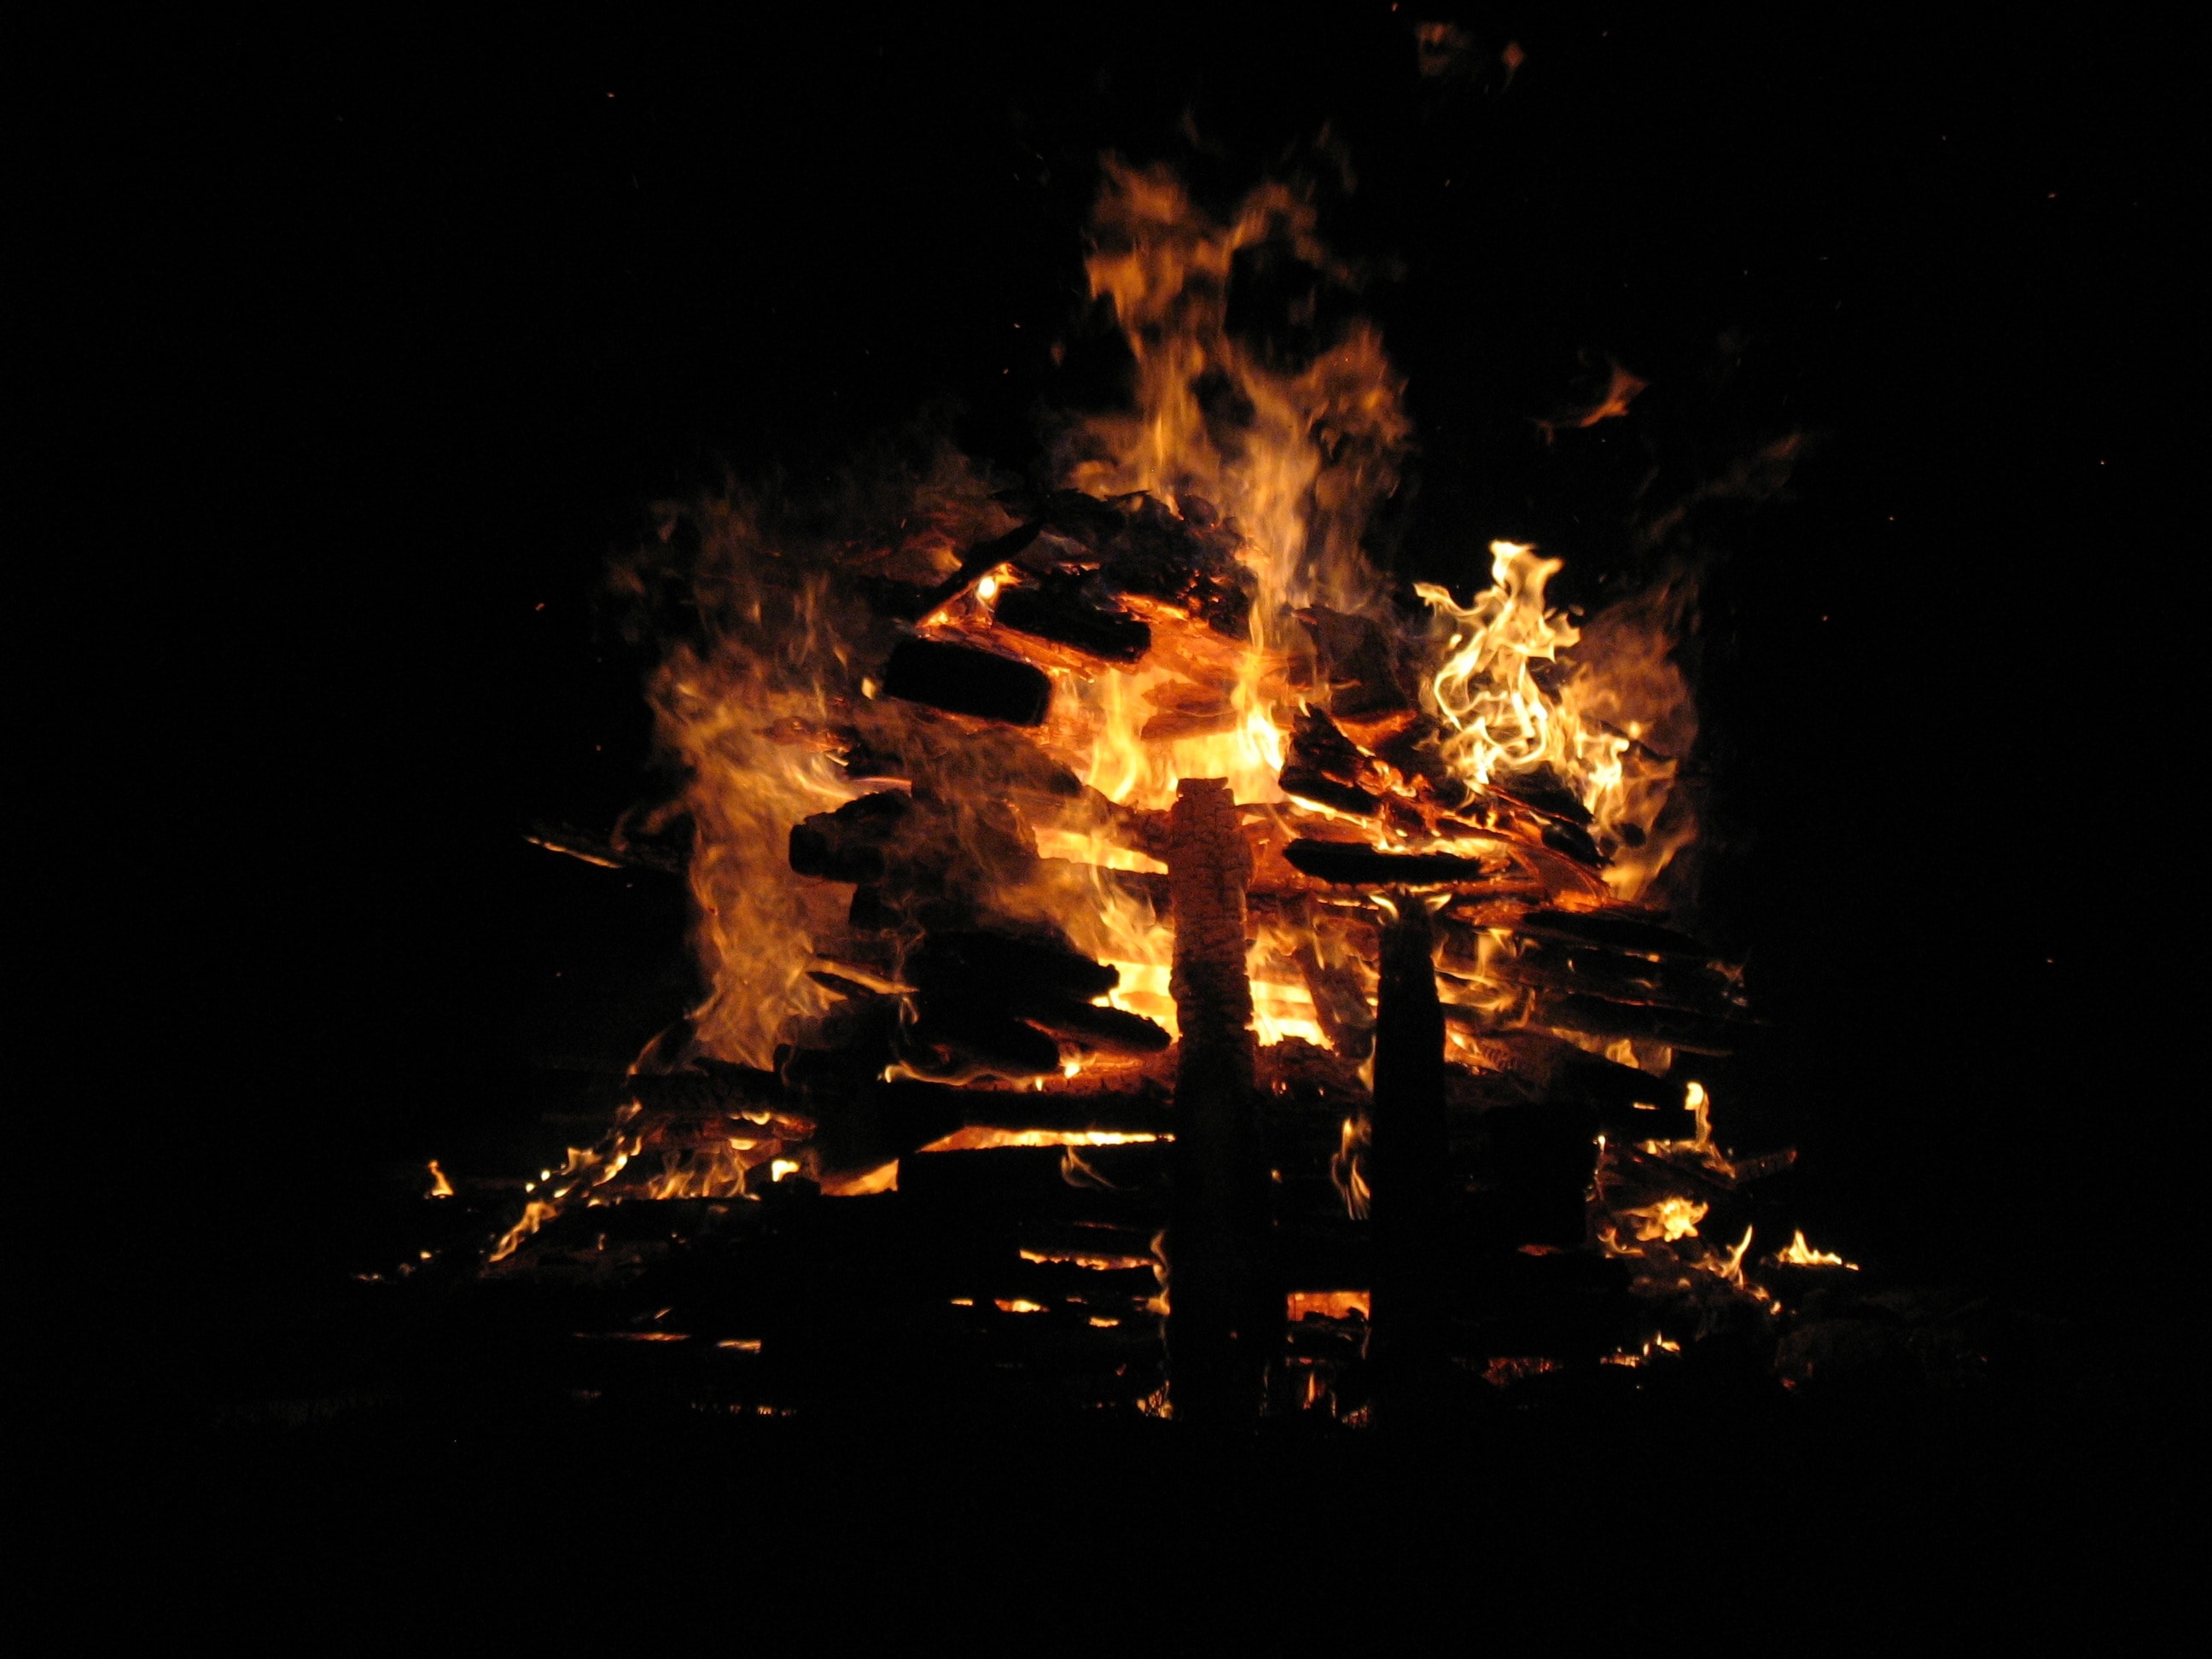 Bonfire during night